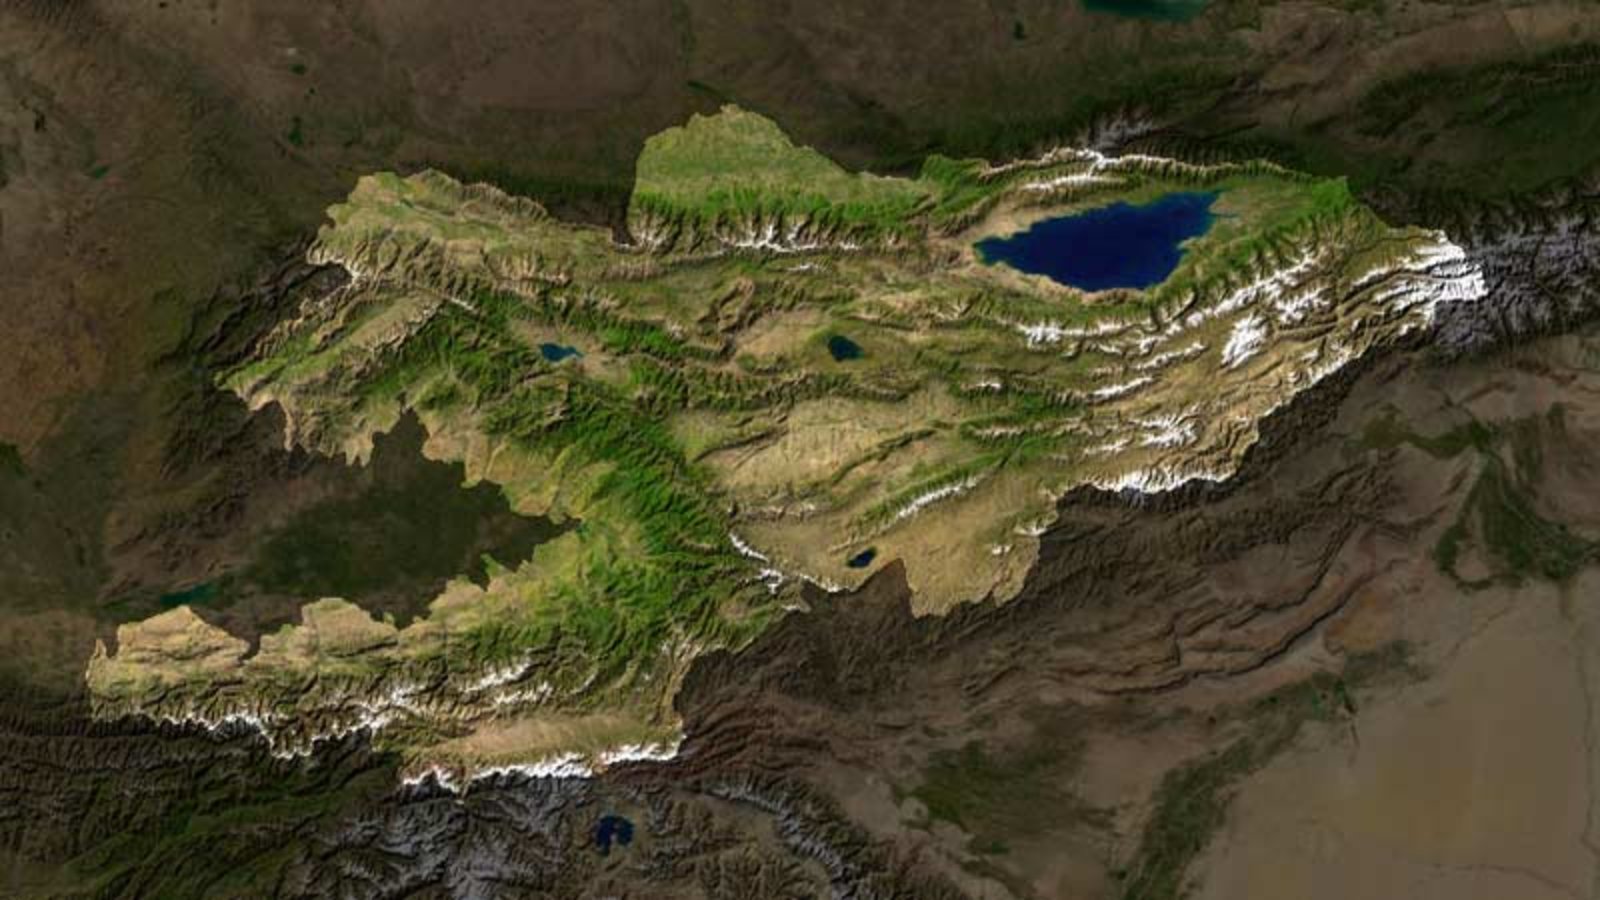 kyrgyzstan_satellite_photo_nasa_wikicom.jpg